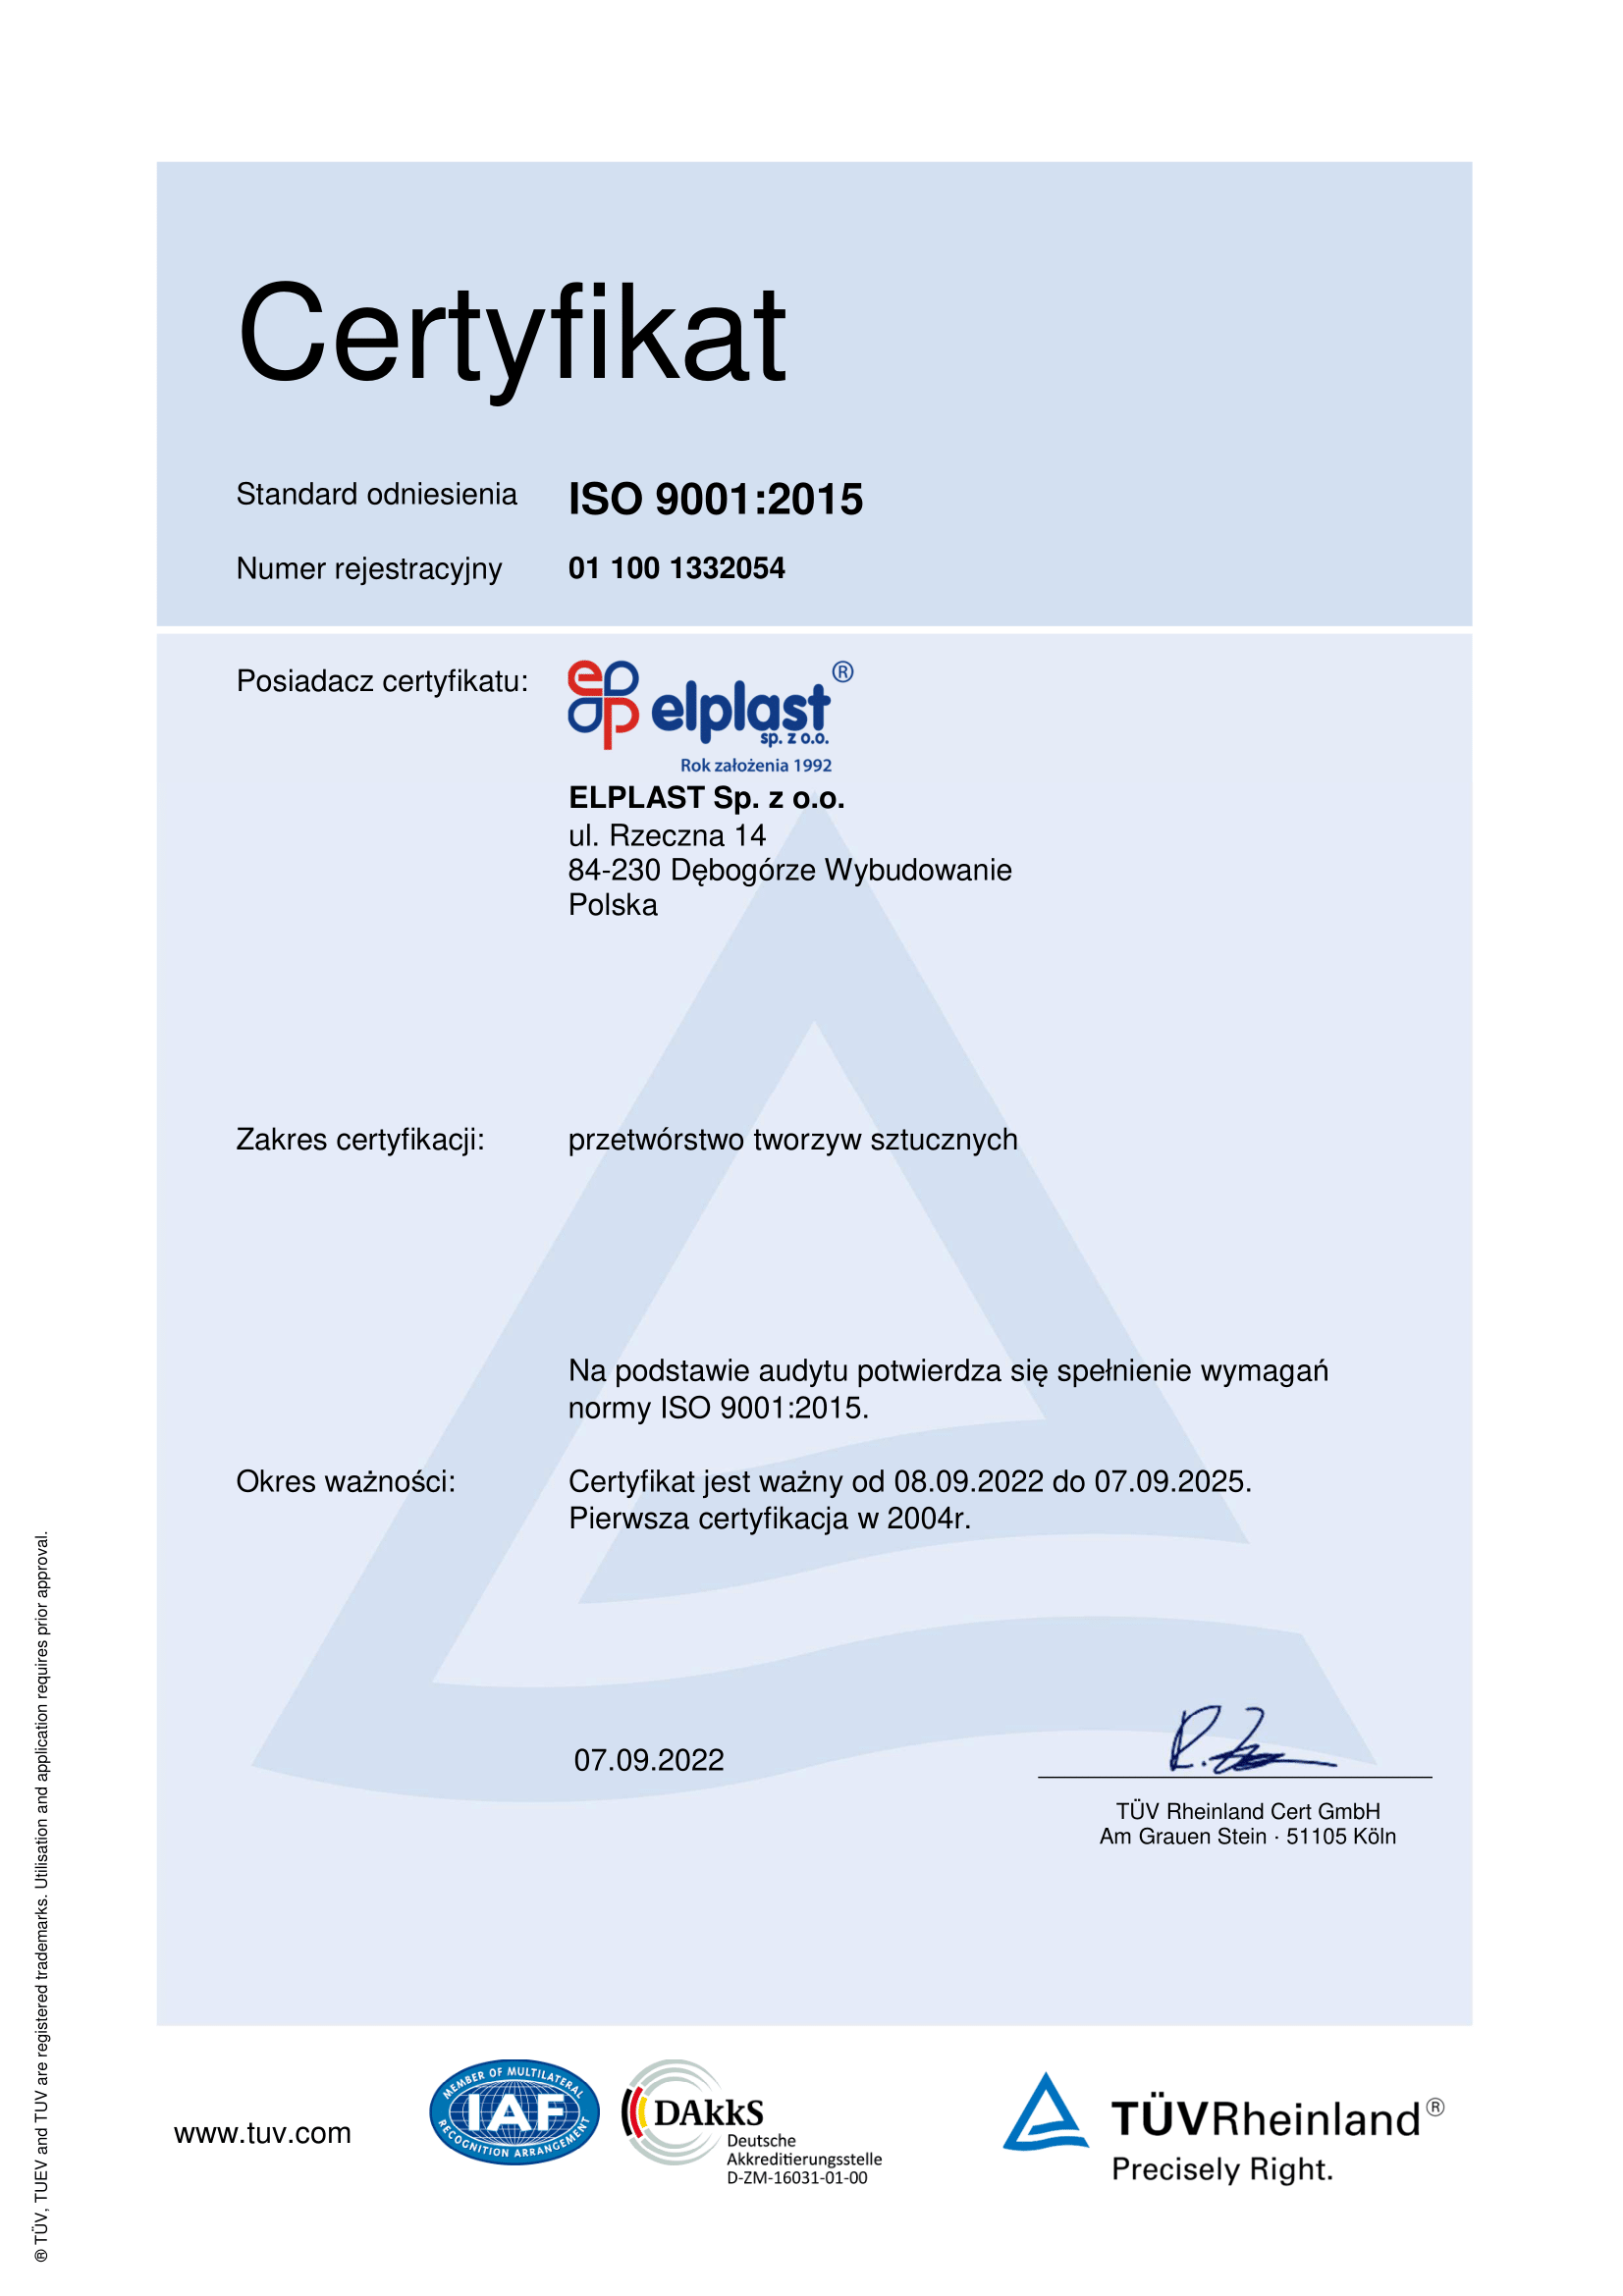 Mockup of a TUV Rheinland certificate of ISO quality